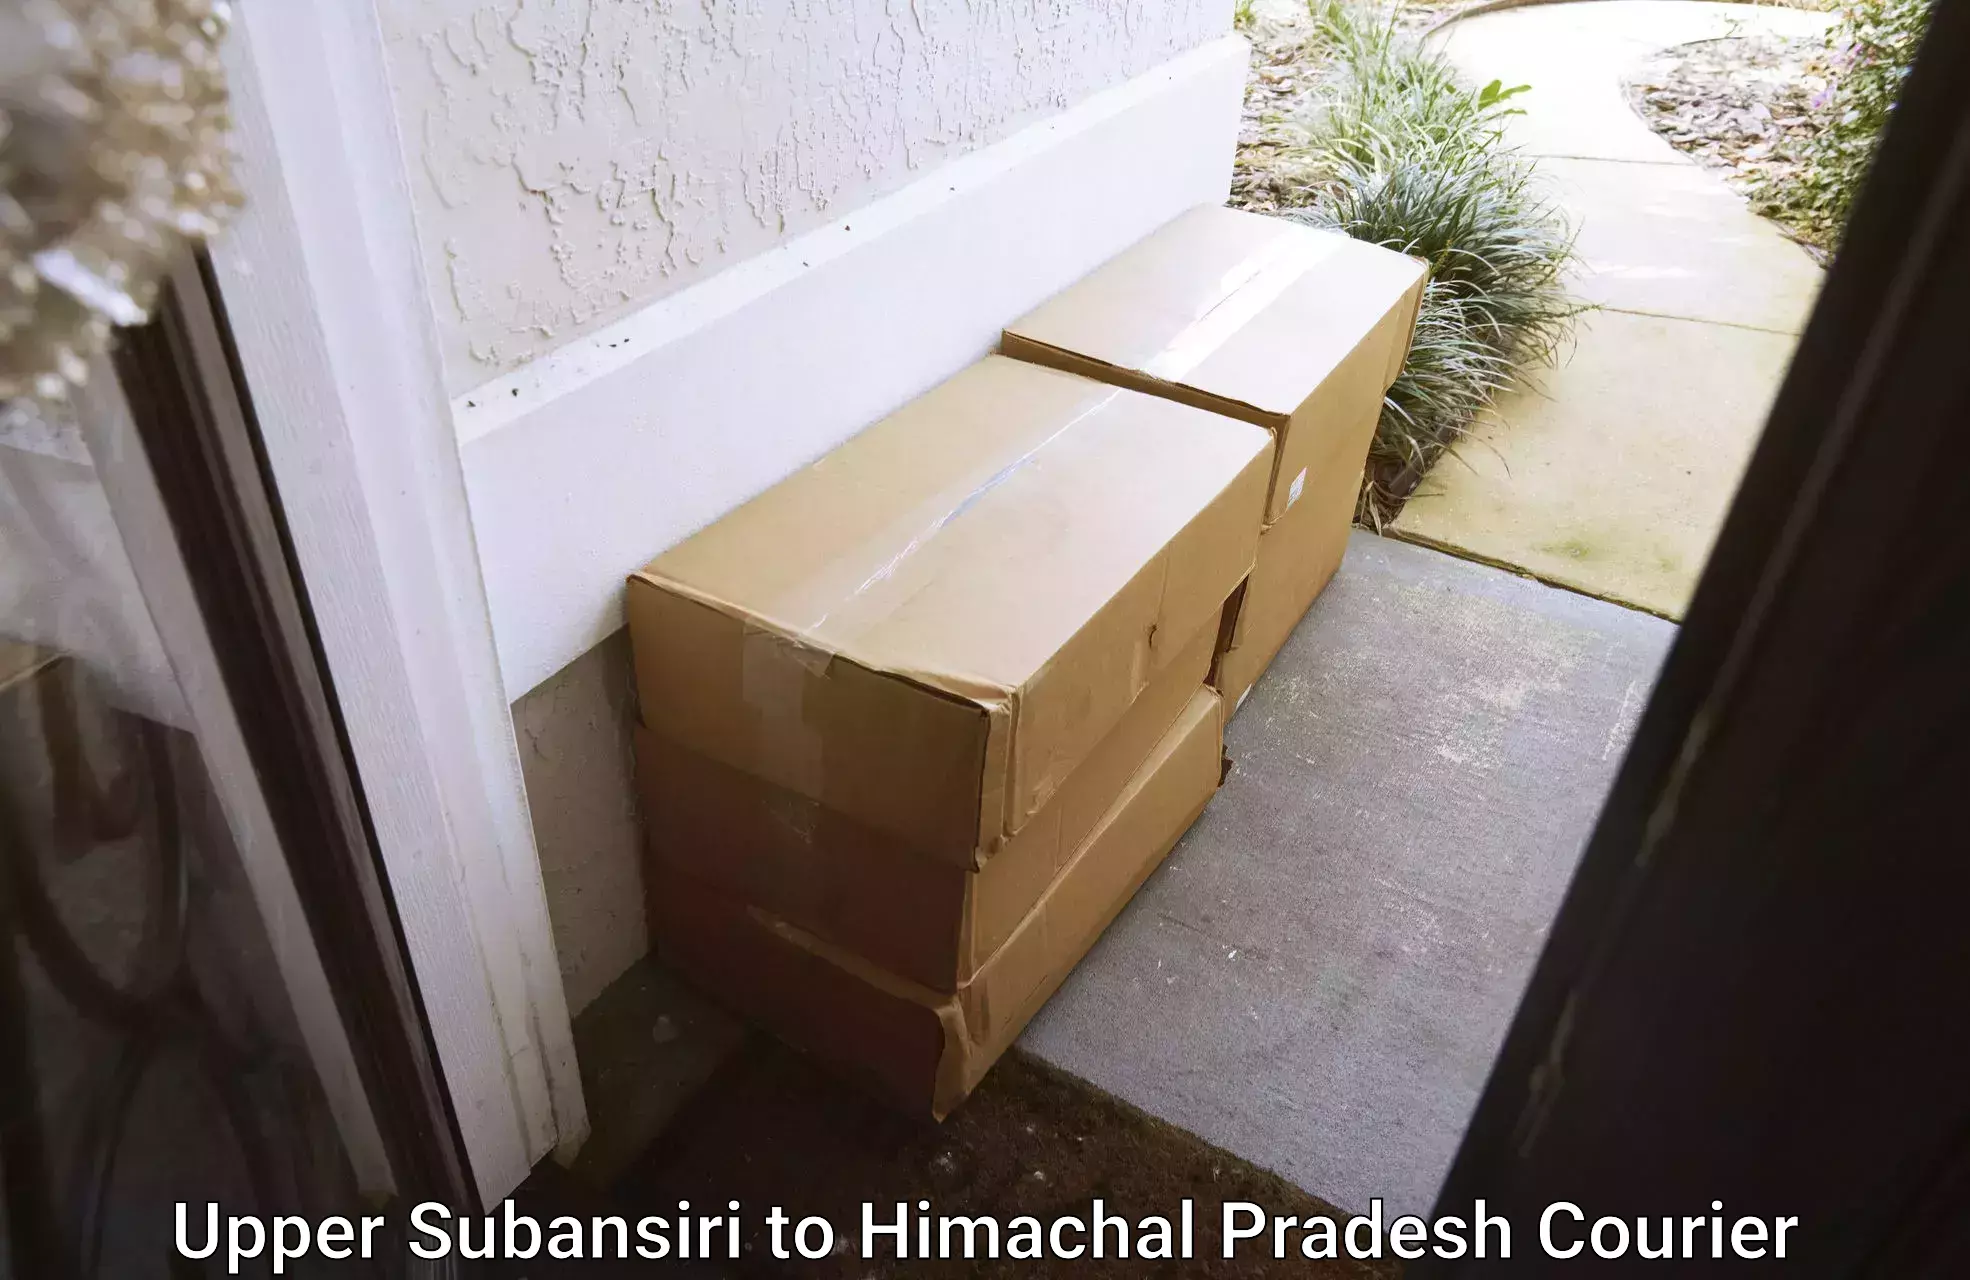 Urgent courier needs Upper Subansiri to Amb Una